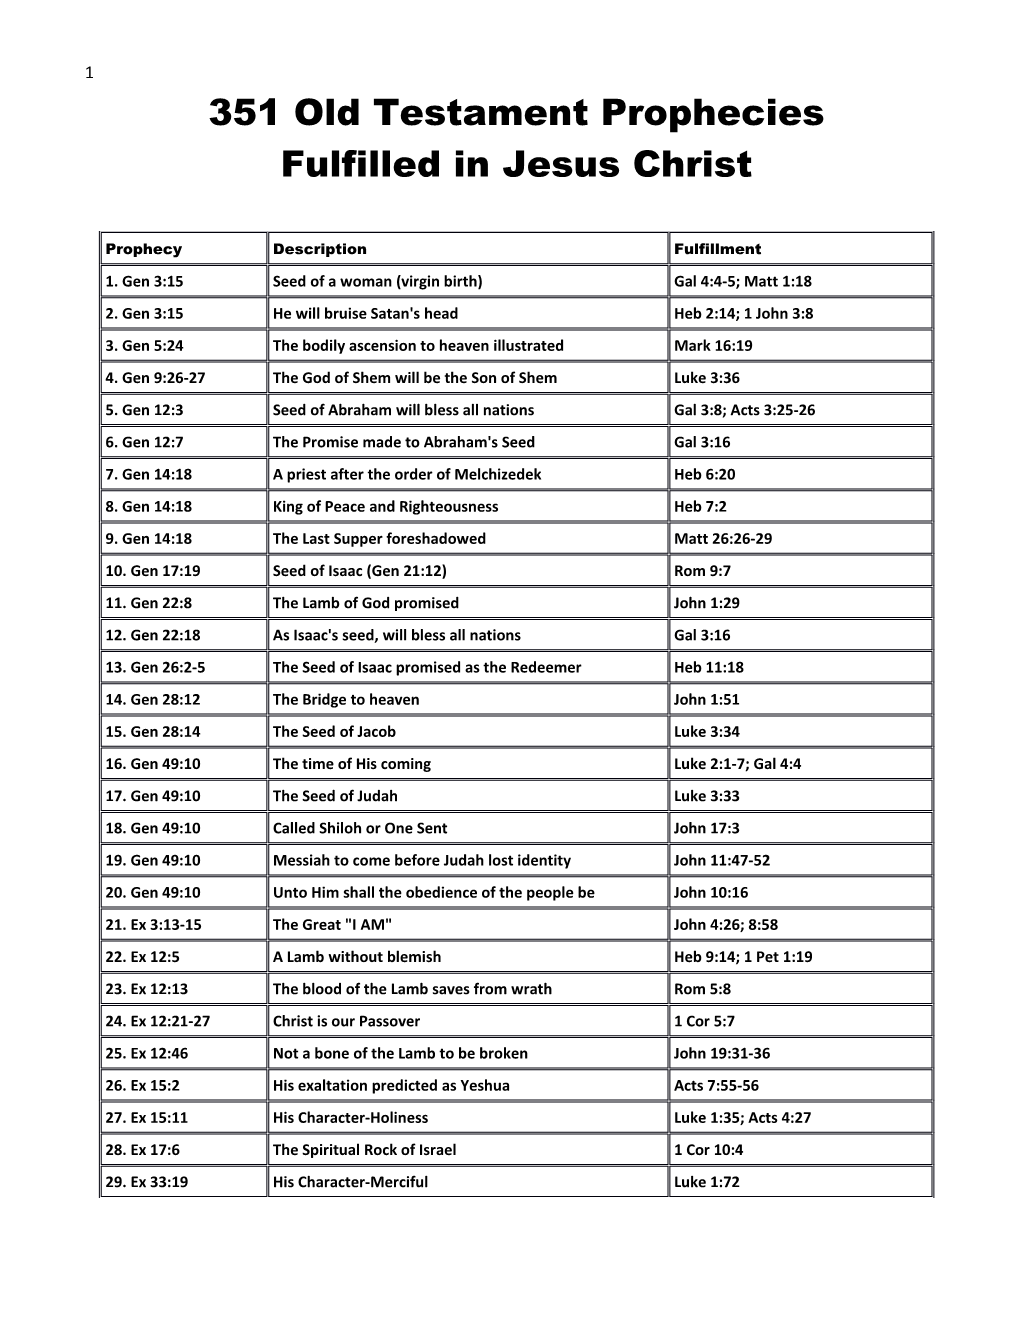 351 Old Testament Prophecies Fulfilled in Jesus Christ